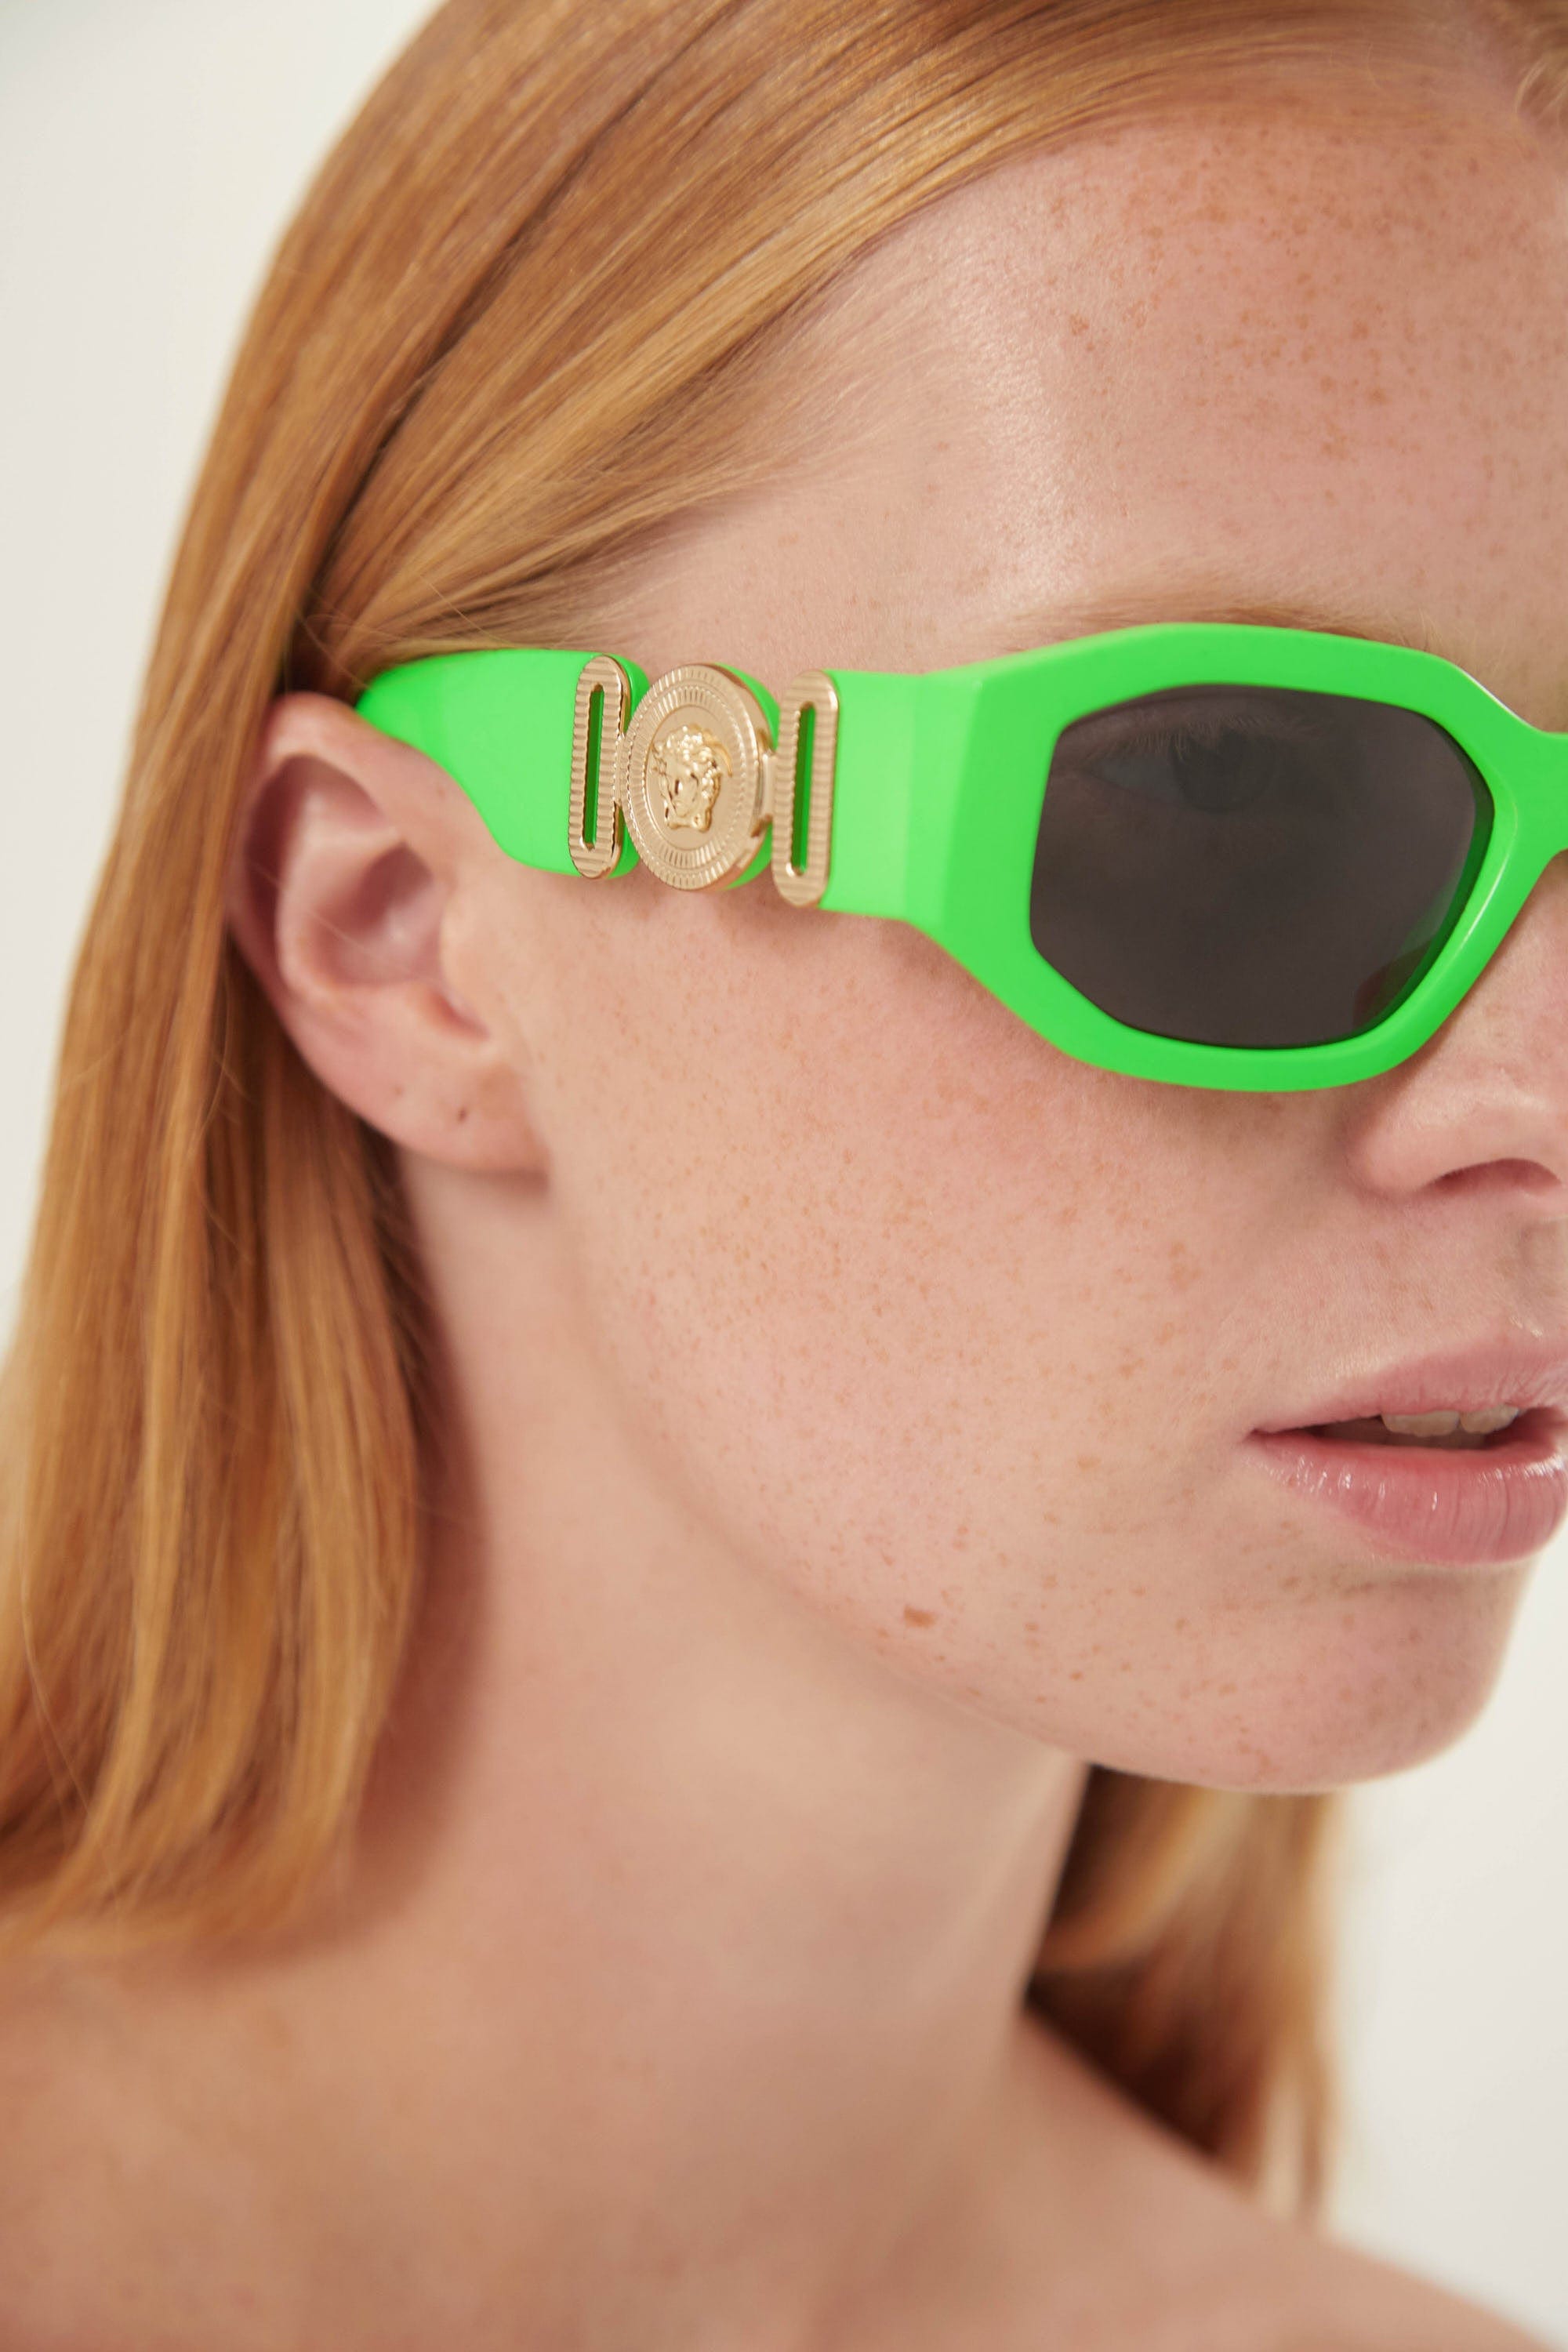 Versace biggie sunglasses in green with iconic jellyfish - Eyewear Club